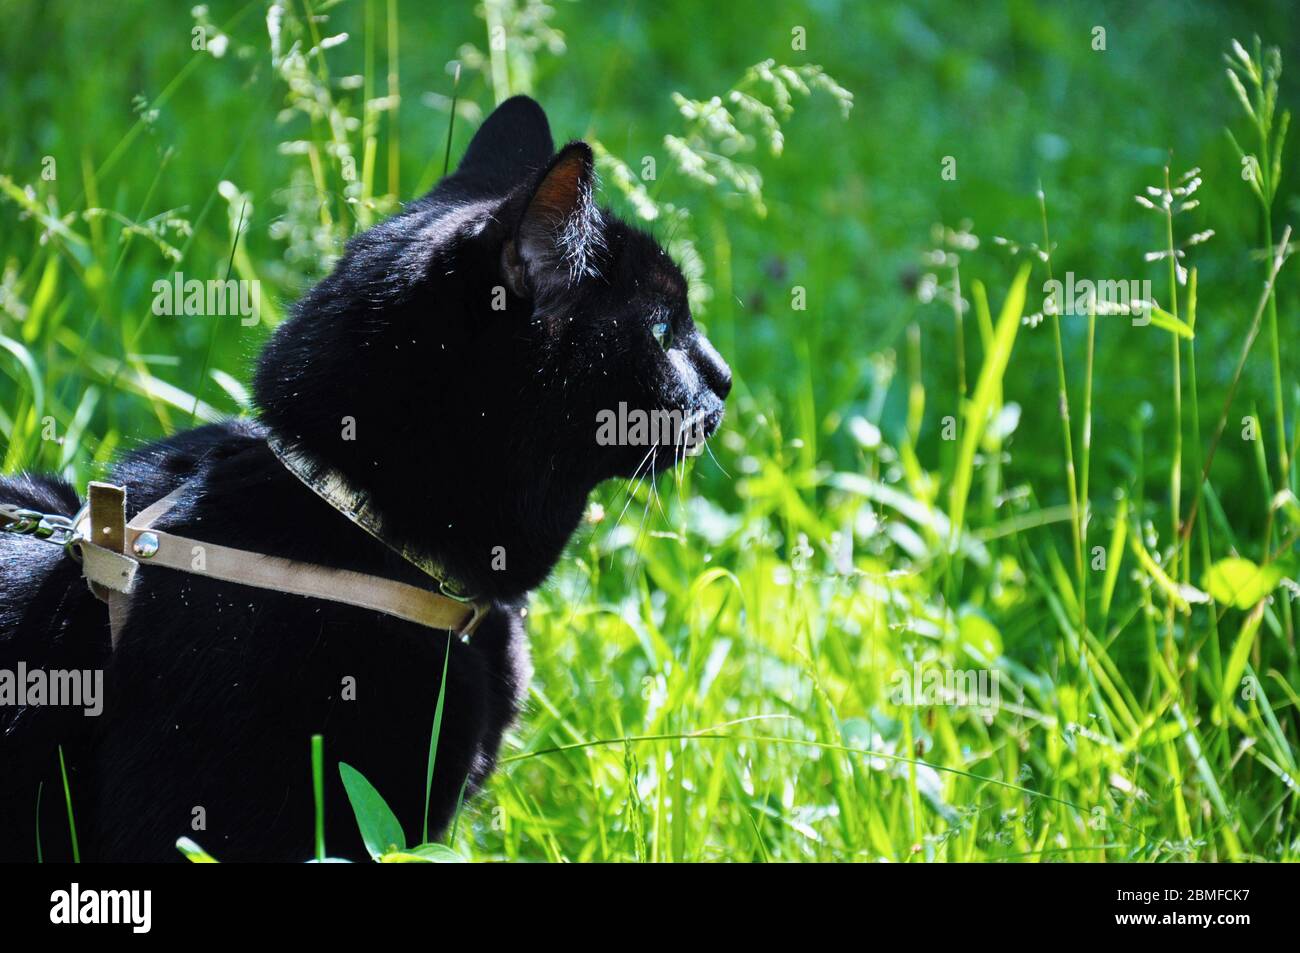 cat on leash walks in green grass Stock Photo